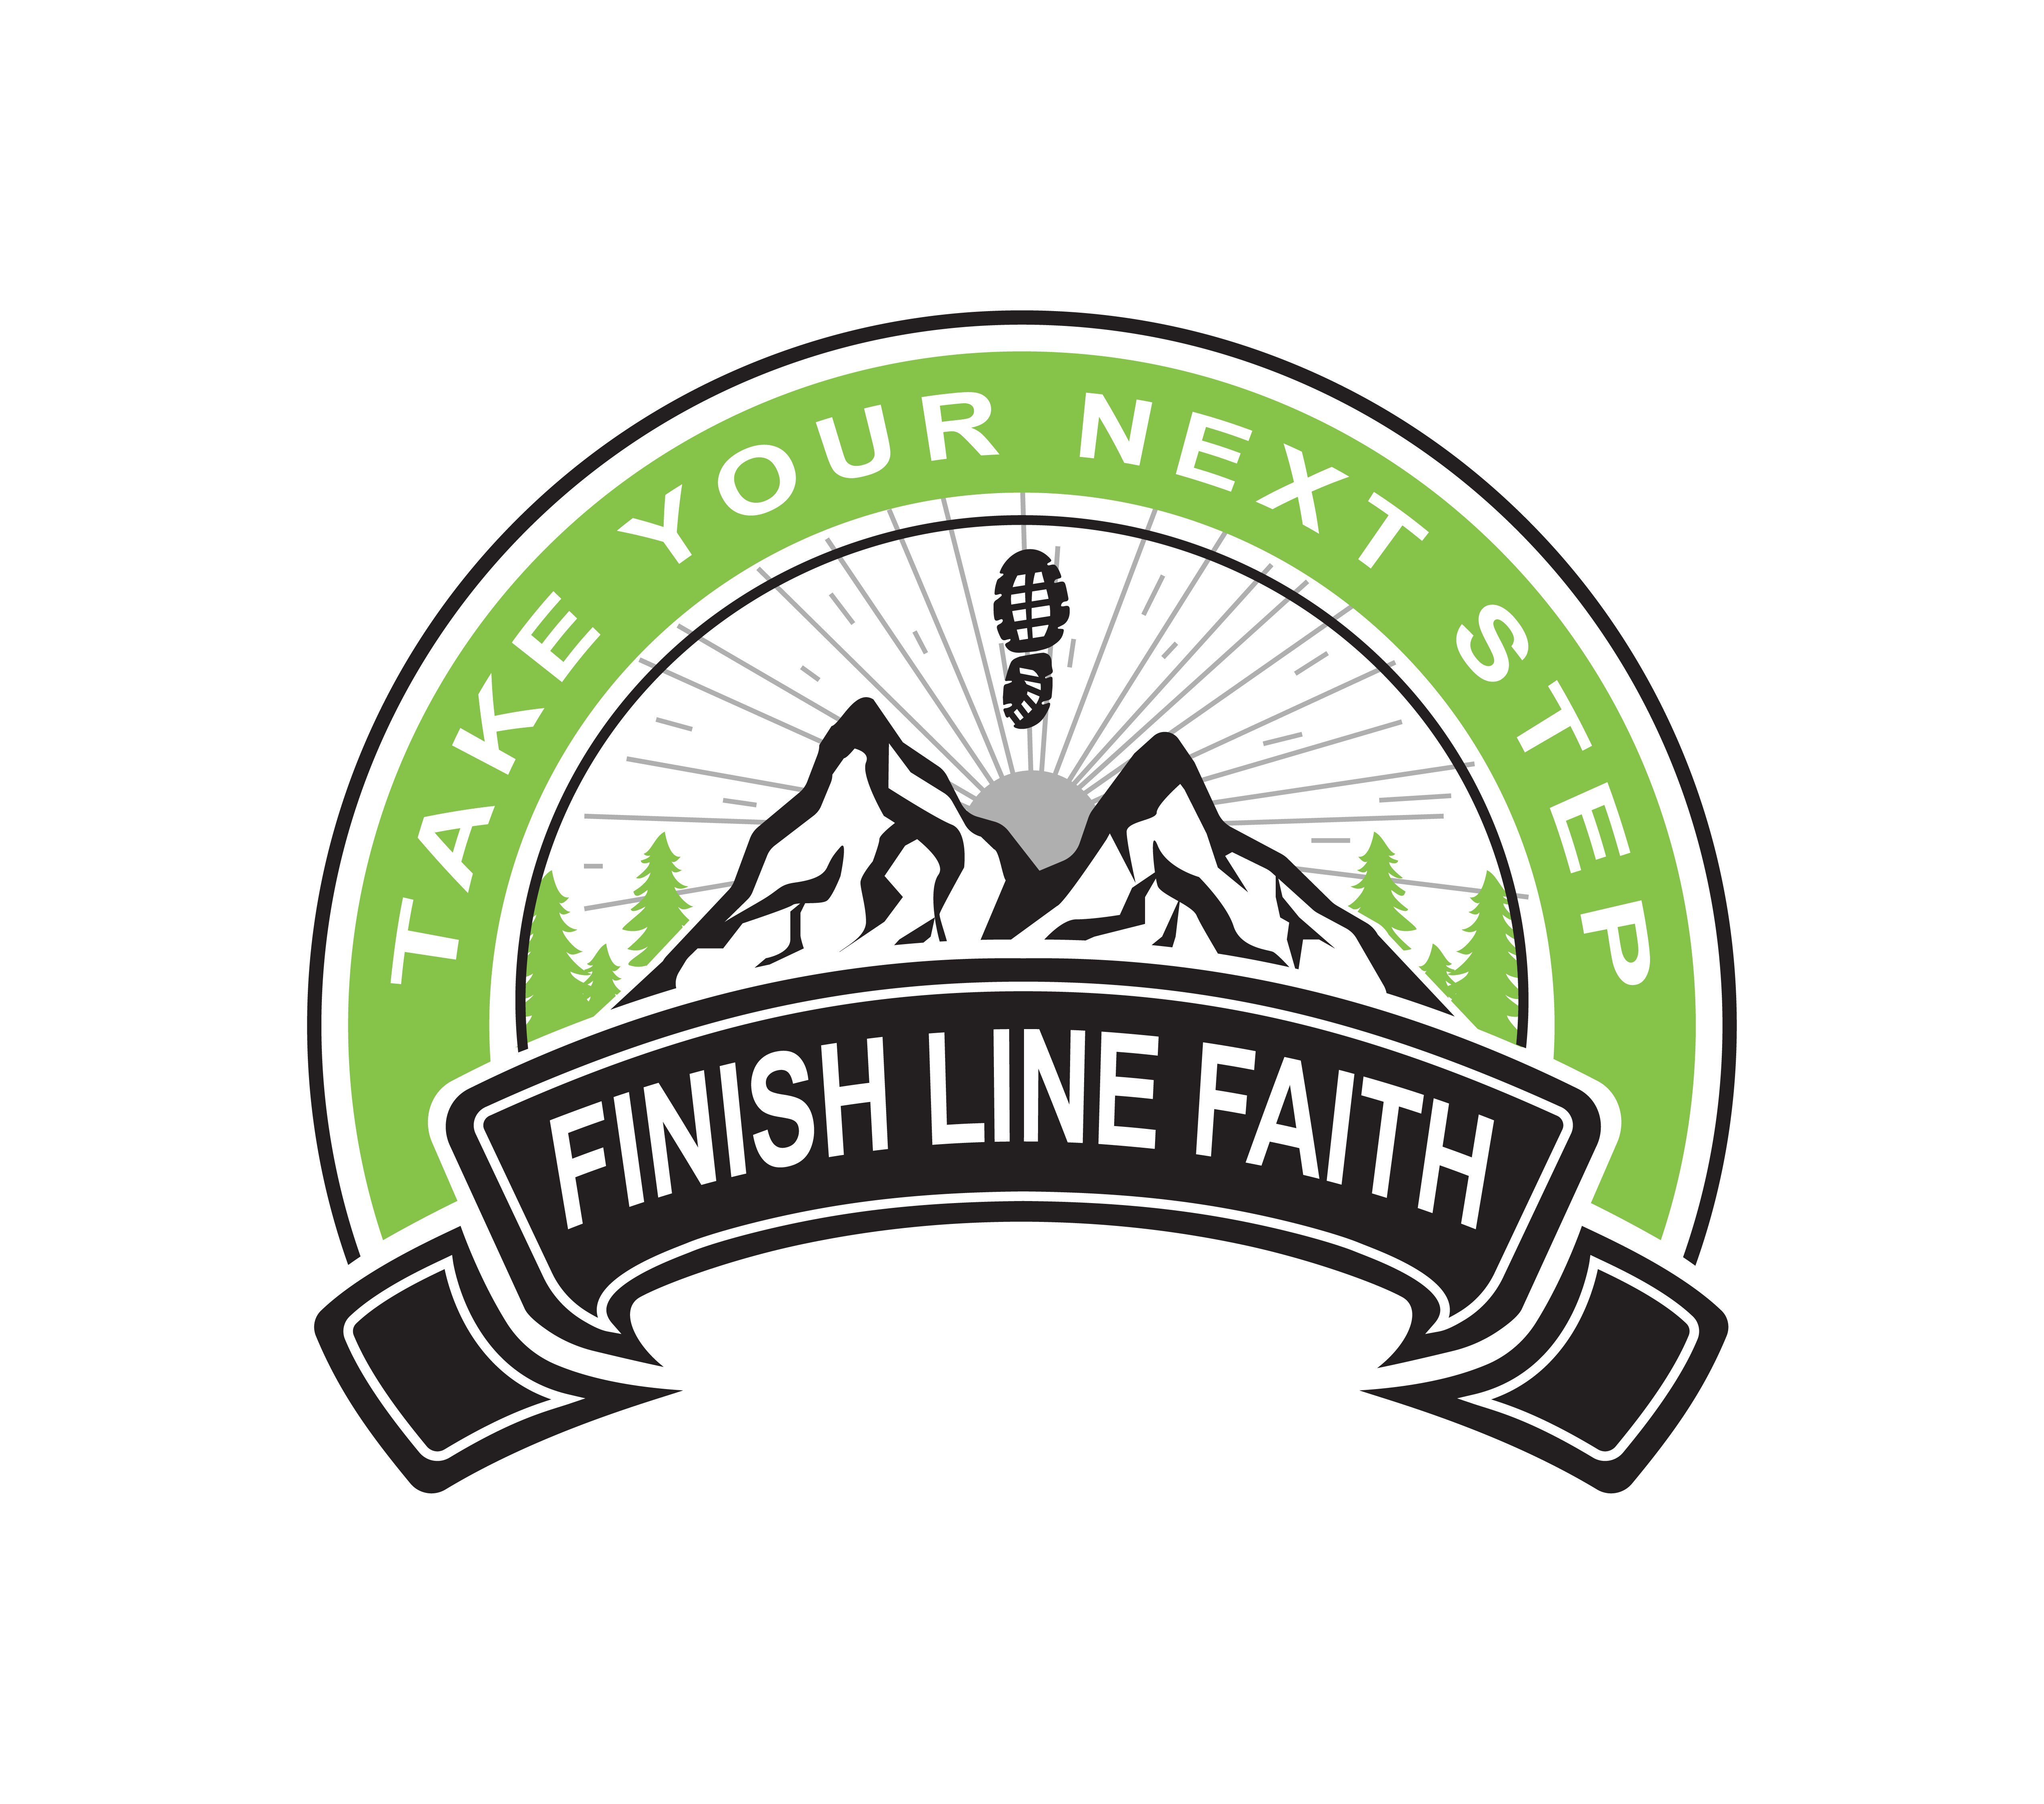 Jesus Does Good - Finish Line Faith
